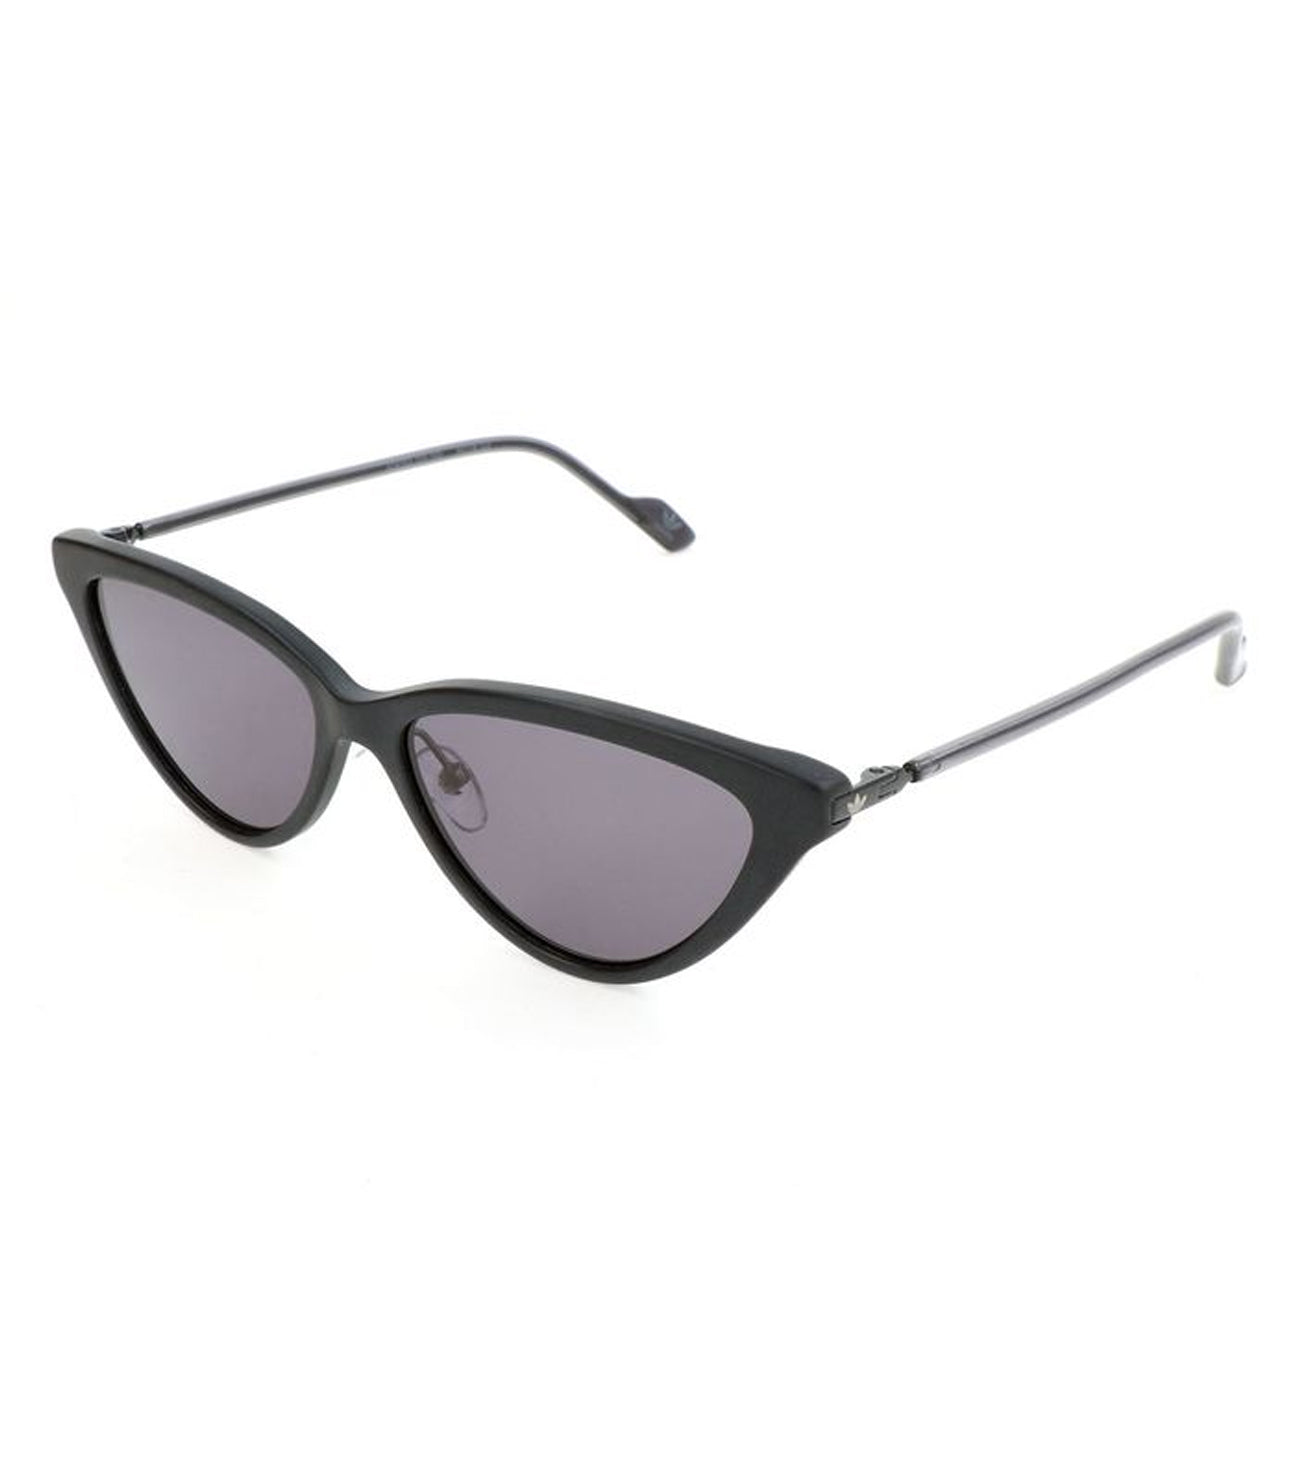 Adidas Originals Women's Silver Cat-eye Sunglasses